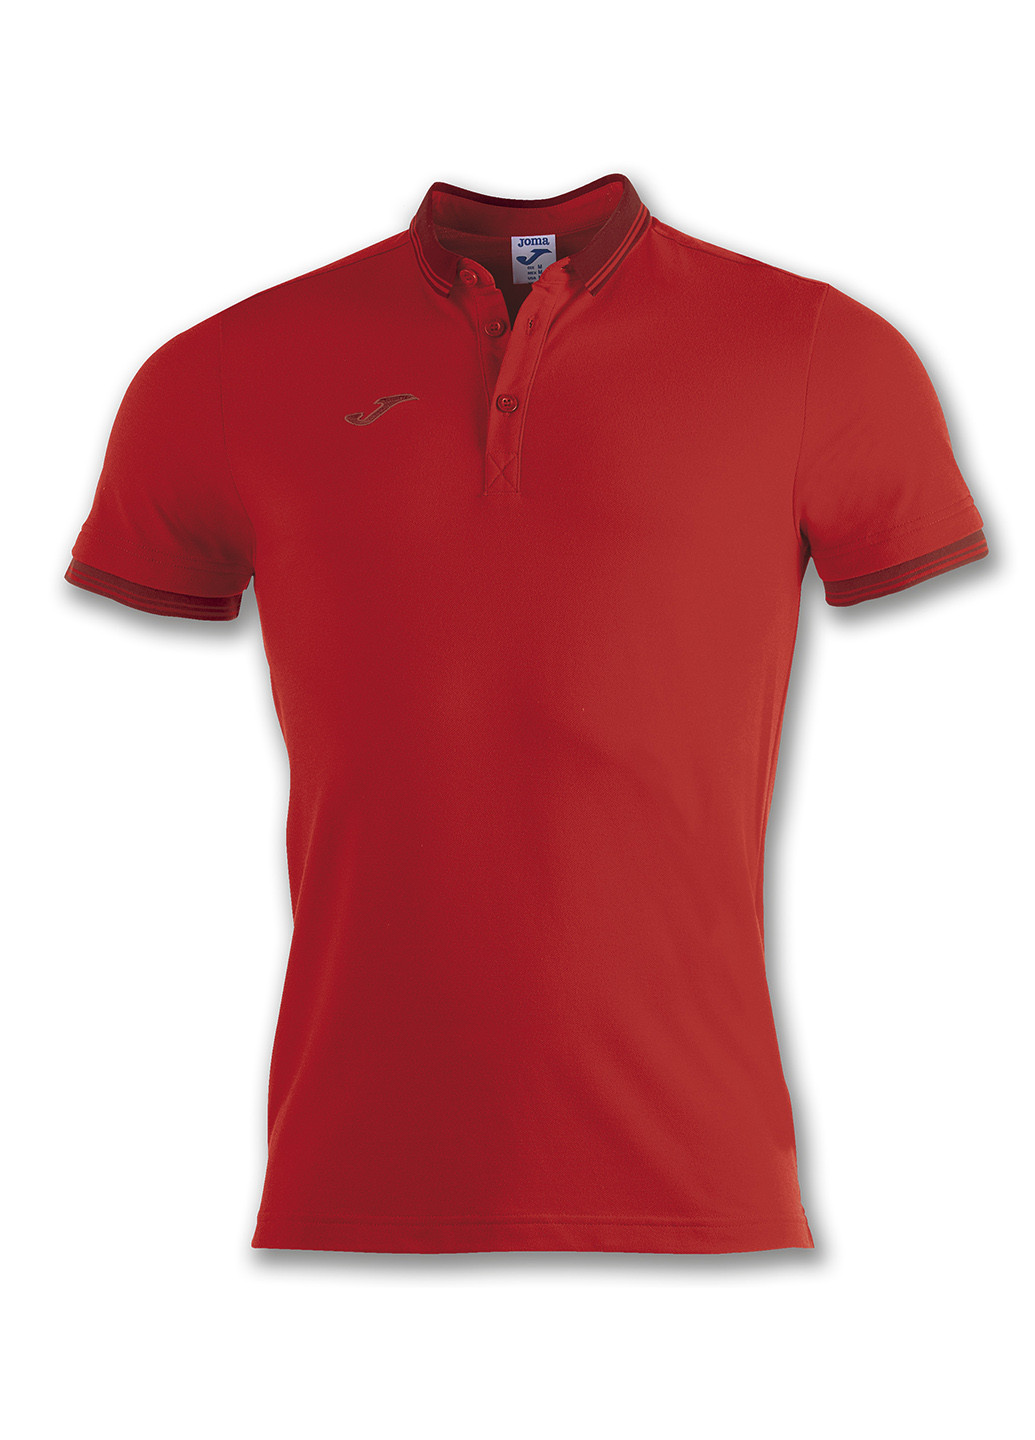 Красная футболка-поло для мужчин Joma однотонная